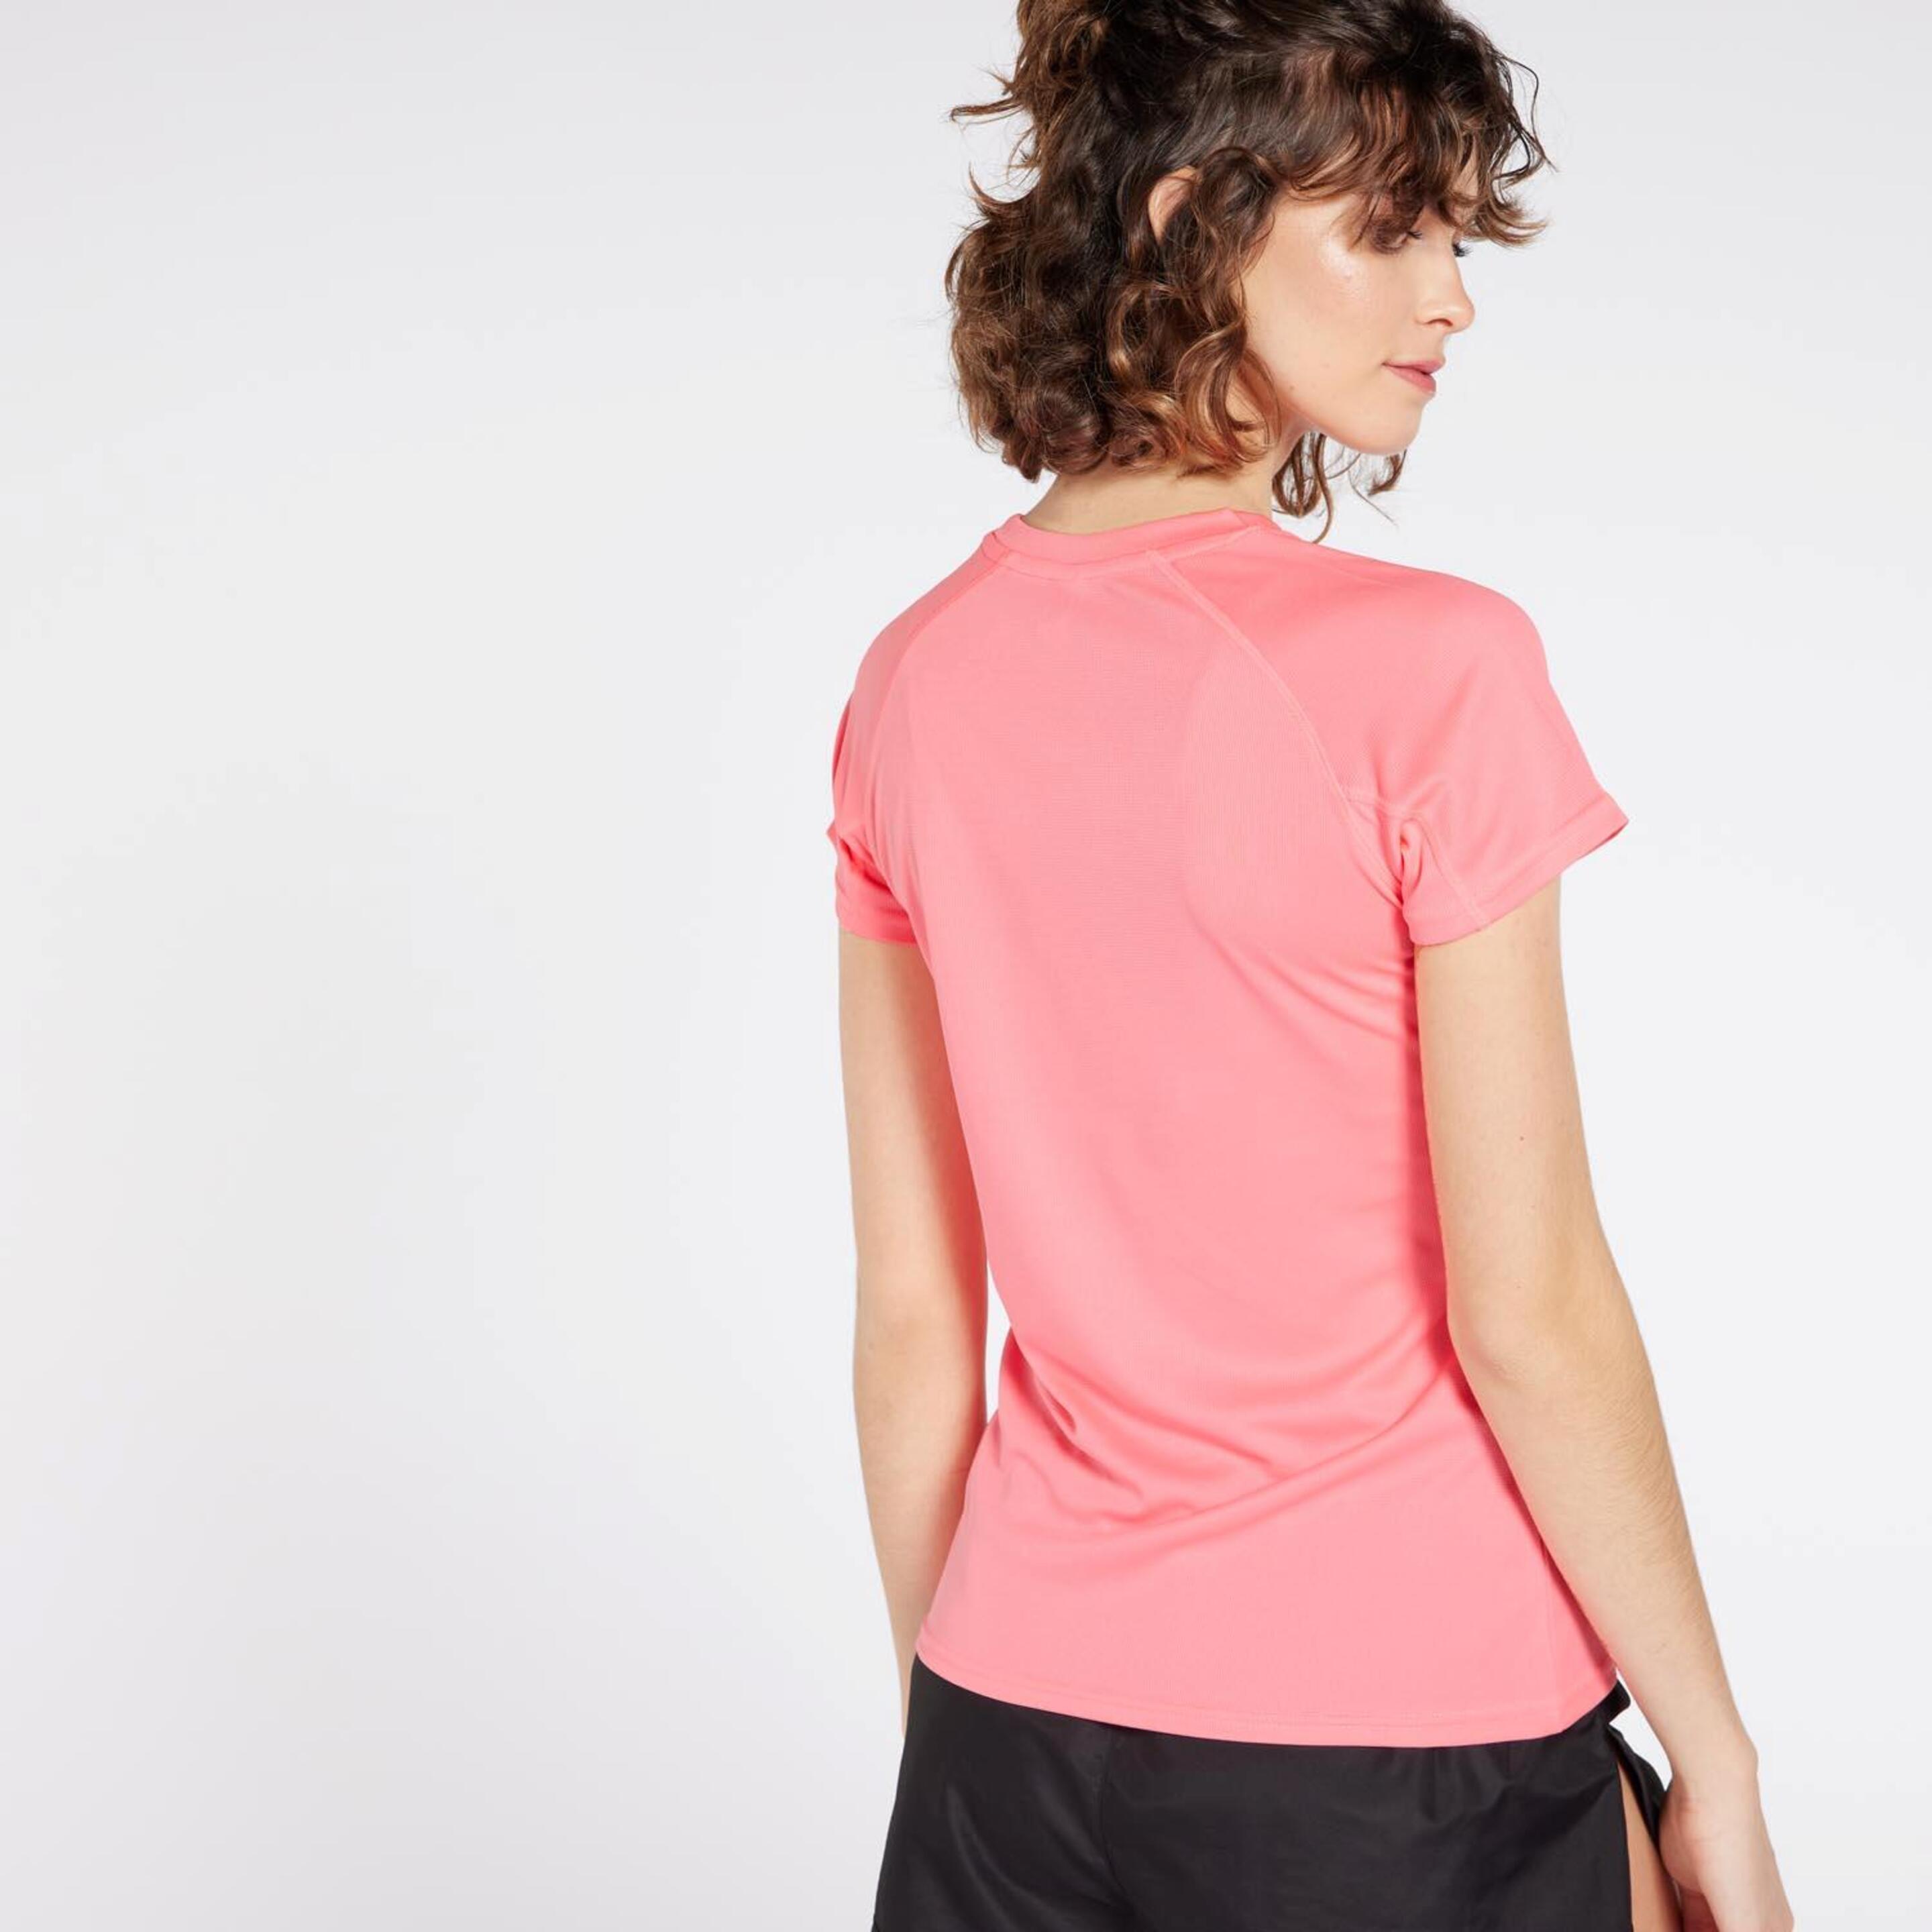 Roly Bahrain - Rosa - Camiseta Running Mujer